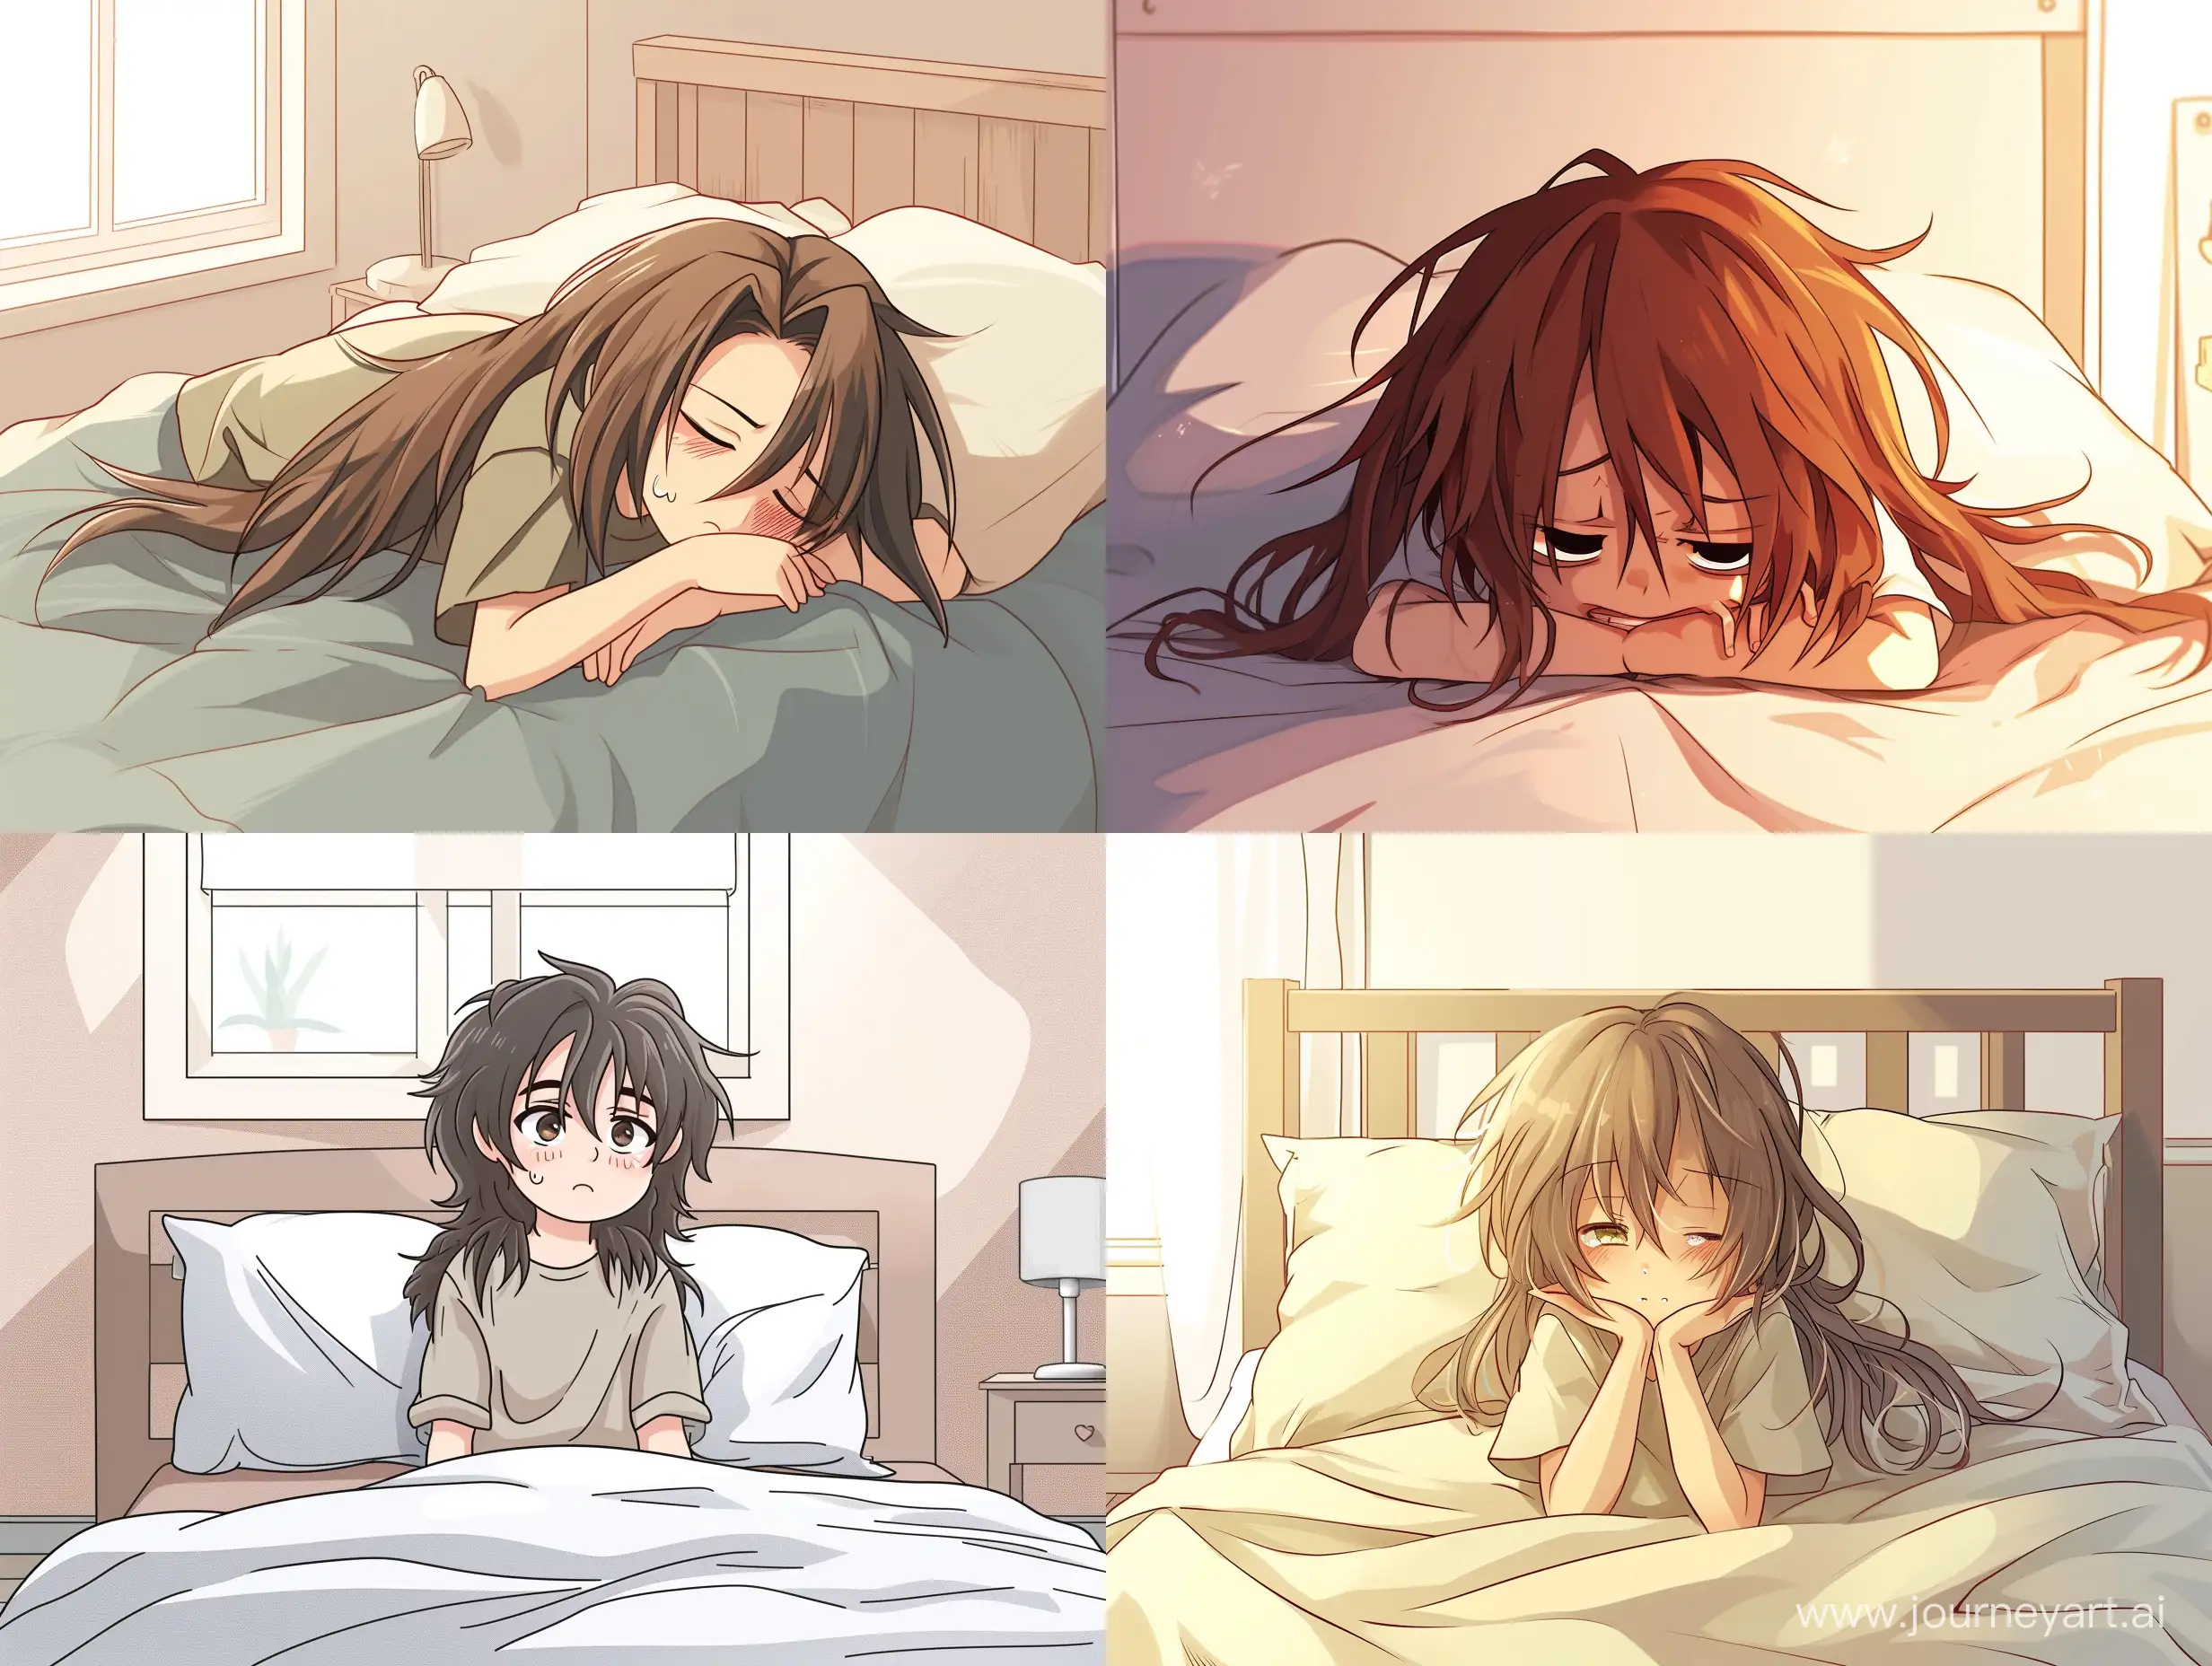 Sleepy-Chibi-Boy-Waking-Up-in-Anime-Bedroom